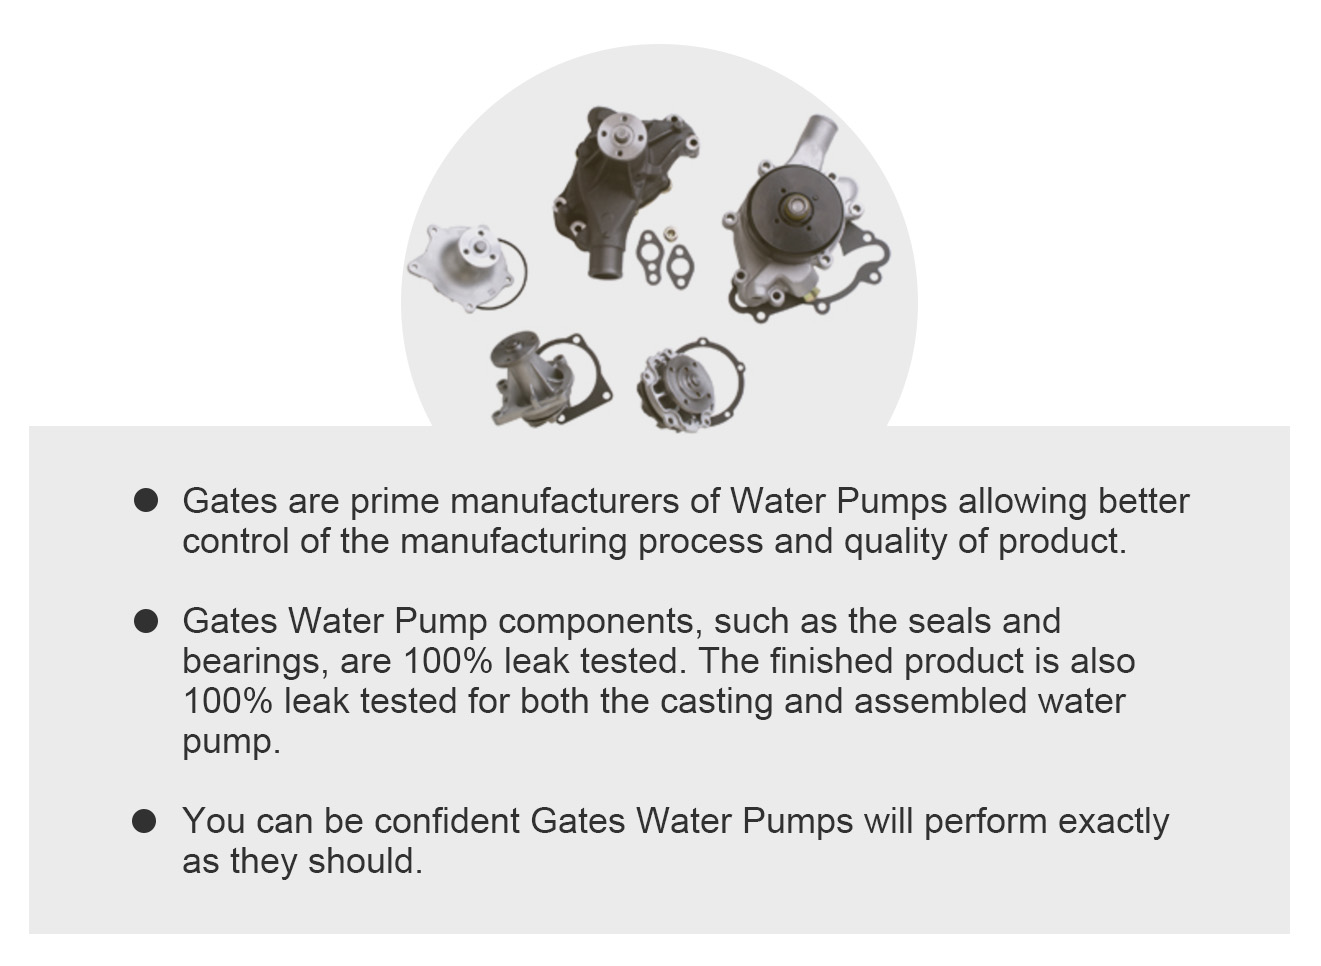 Gates Water Pumps